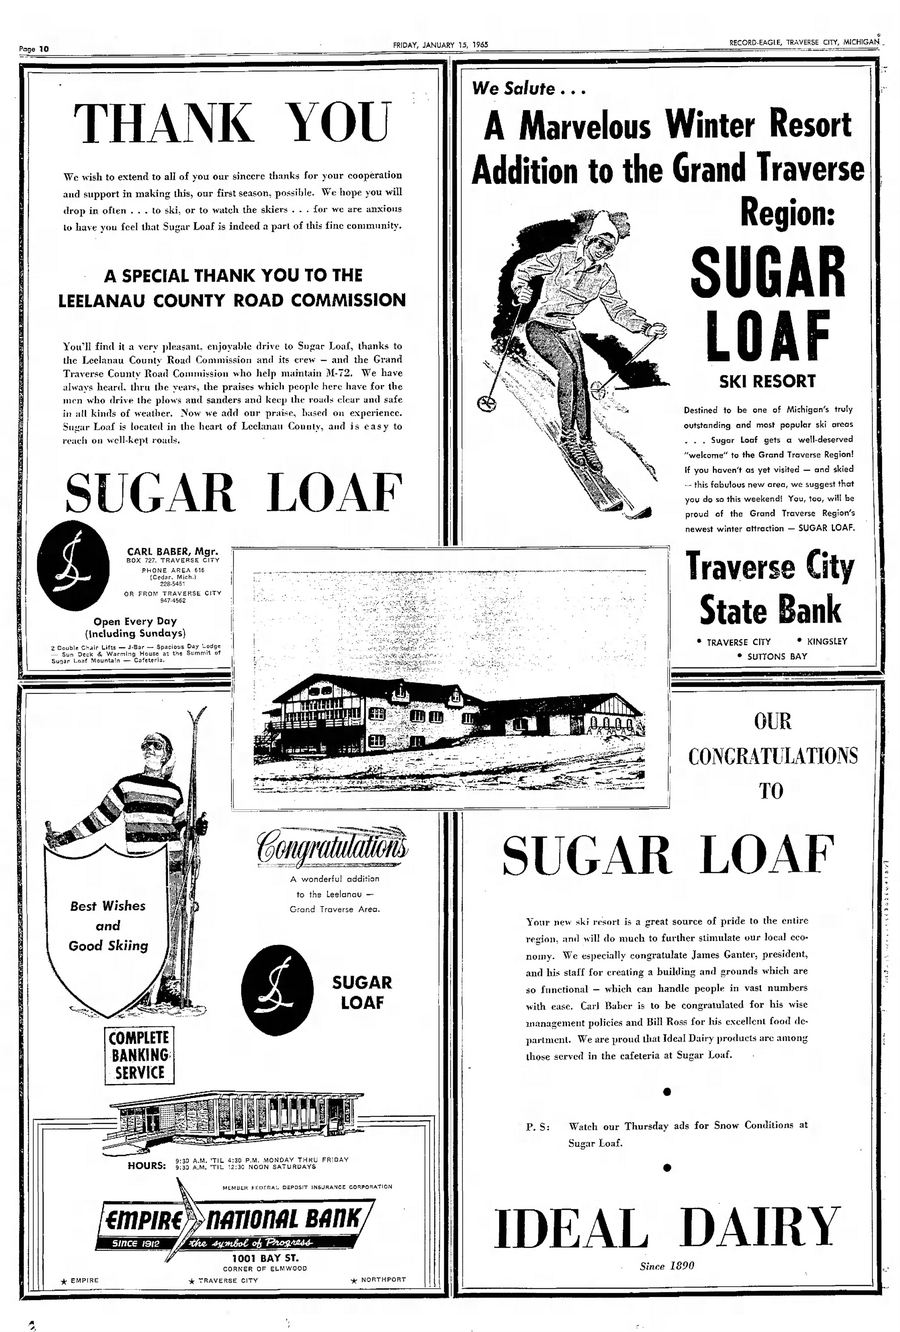 Sugar Loaf Resort - Jan 15 Ad